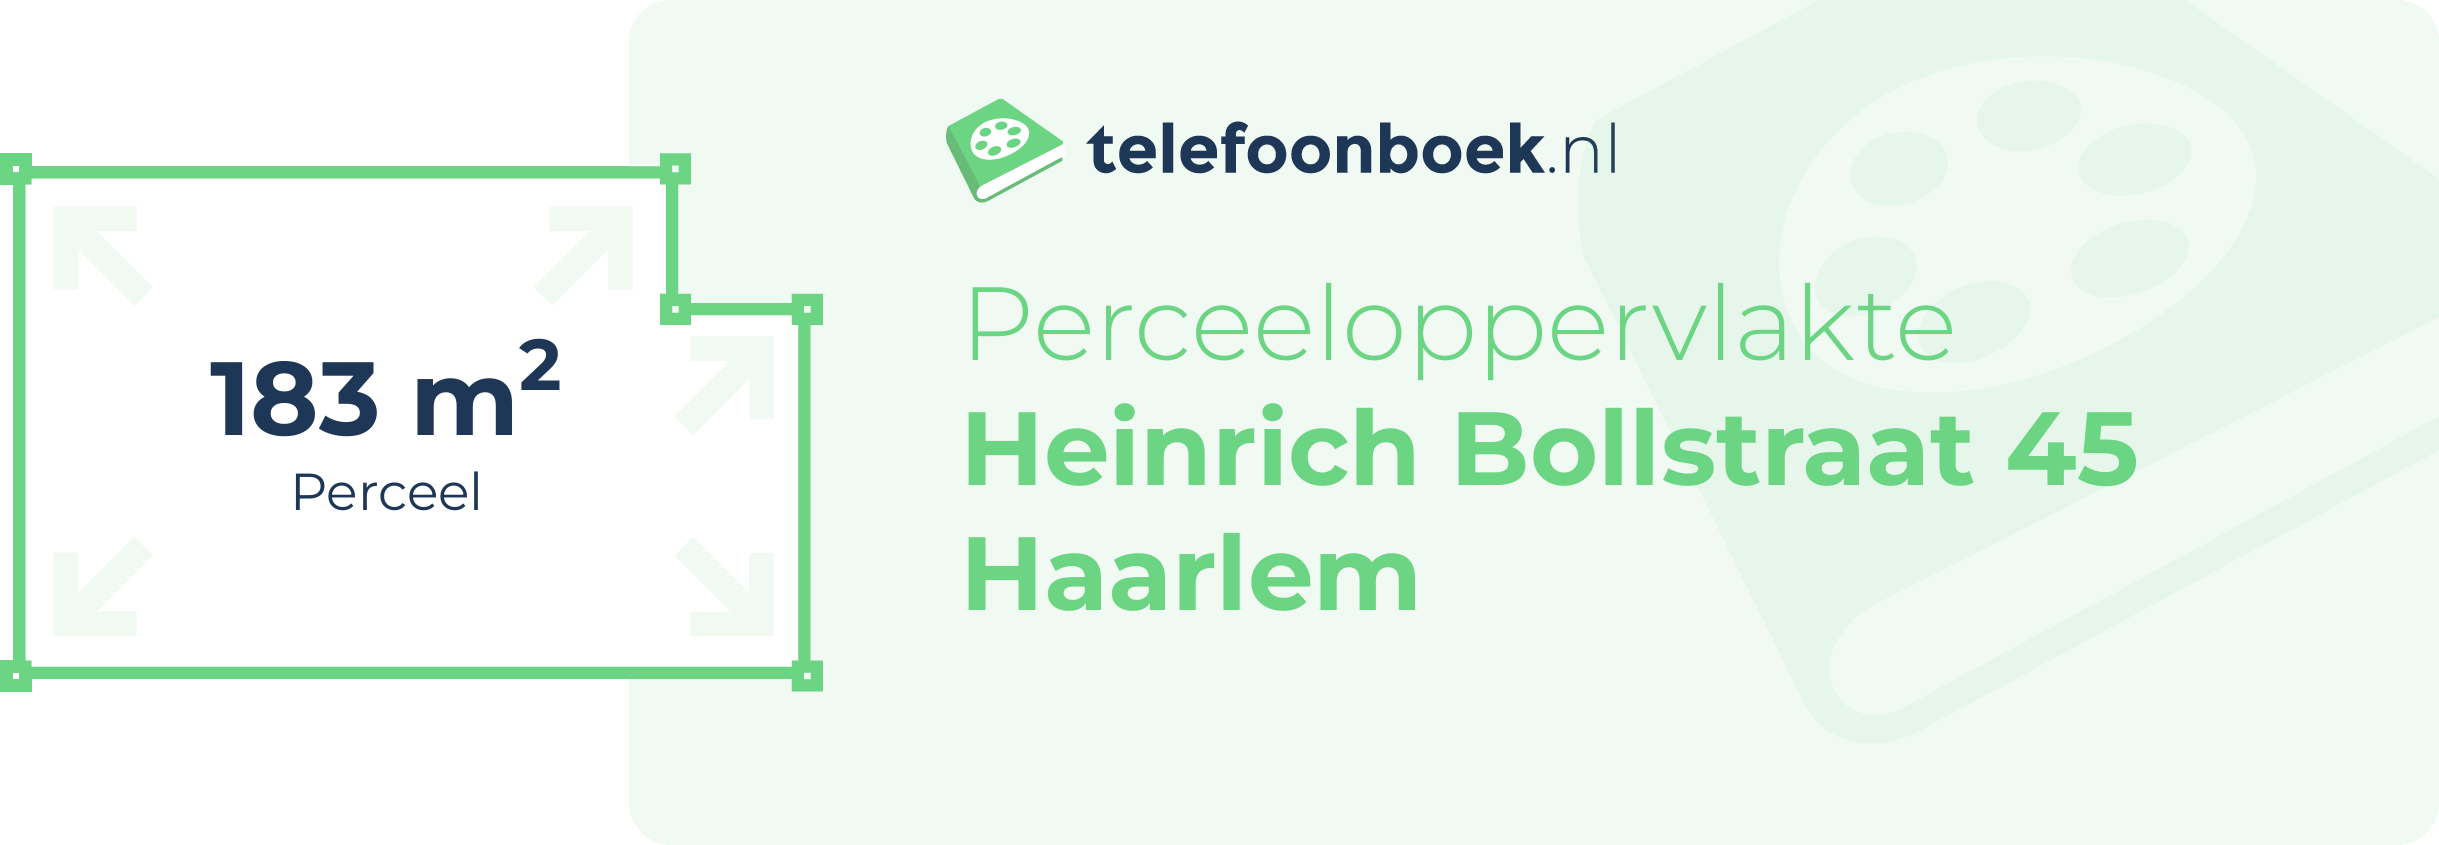 Perceeloppervlakte Heinrich Bollstraat 45 Haarlem